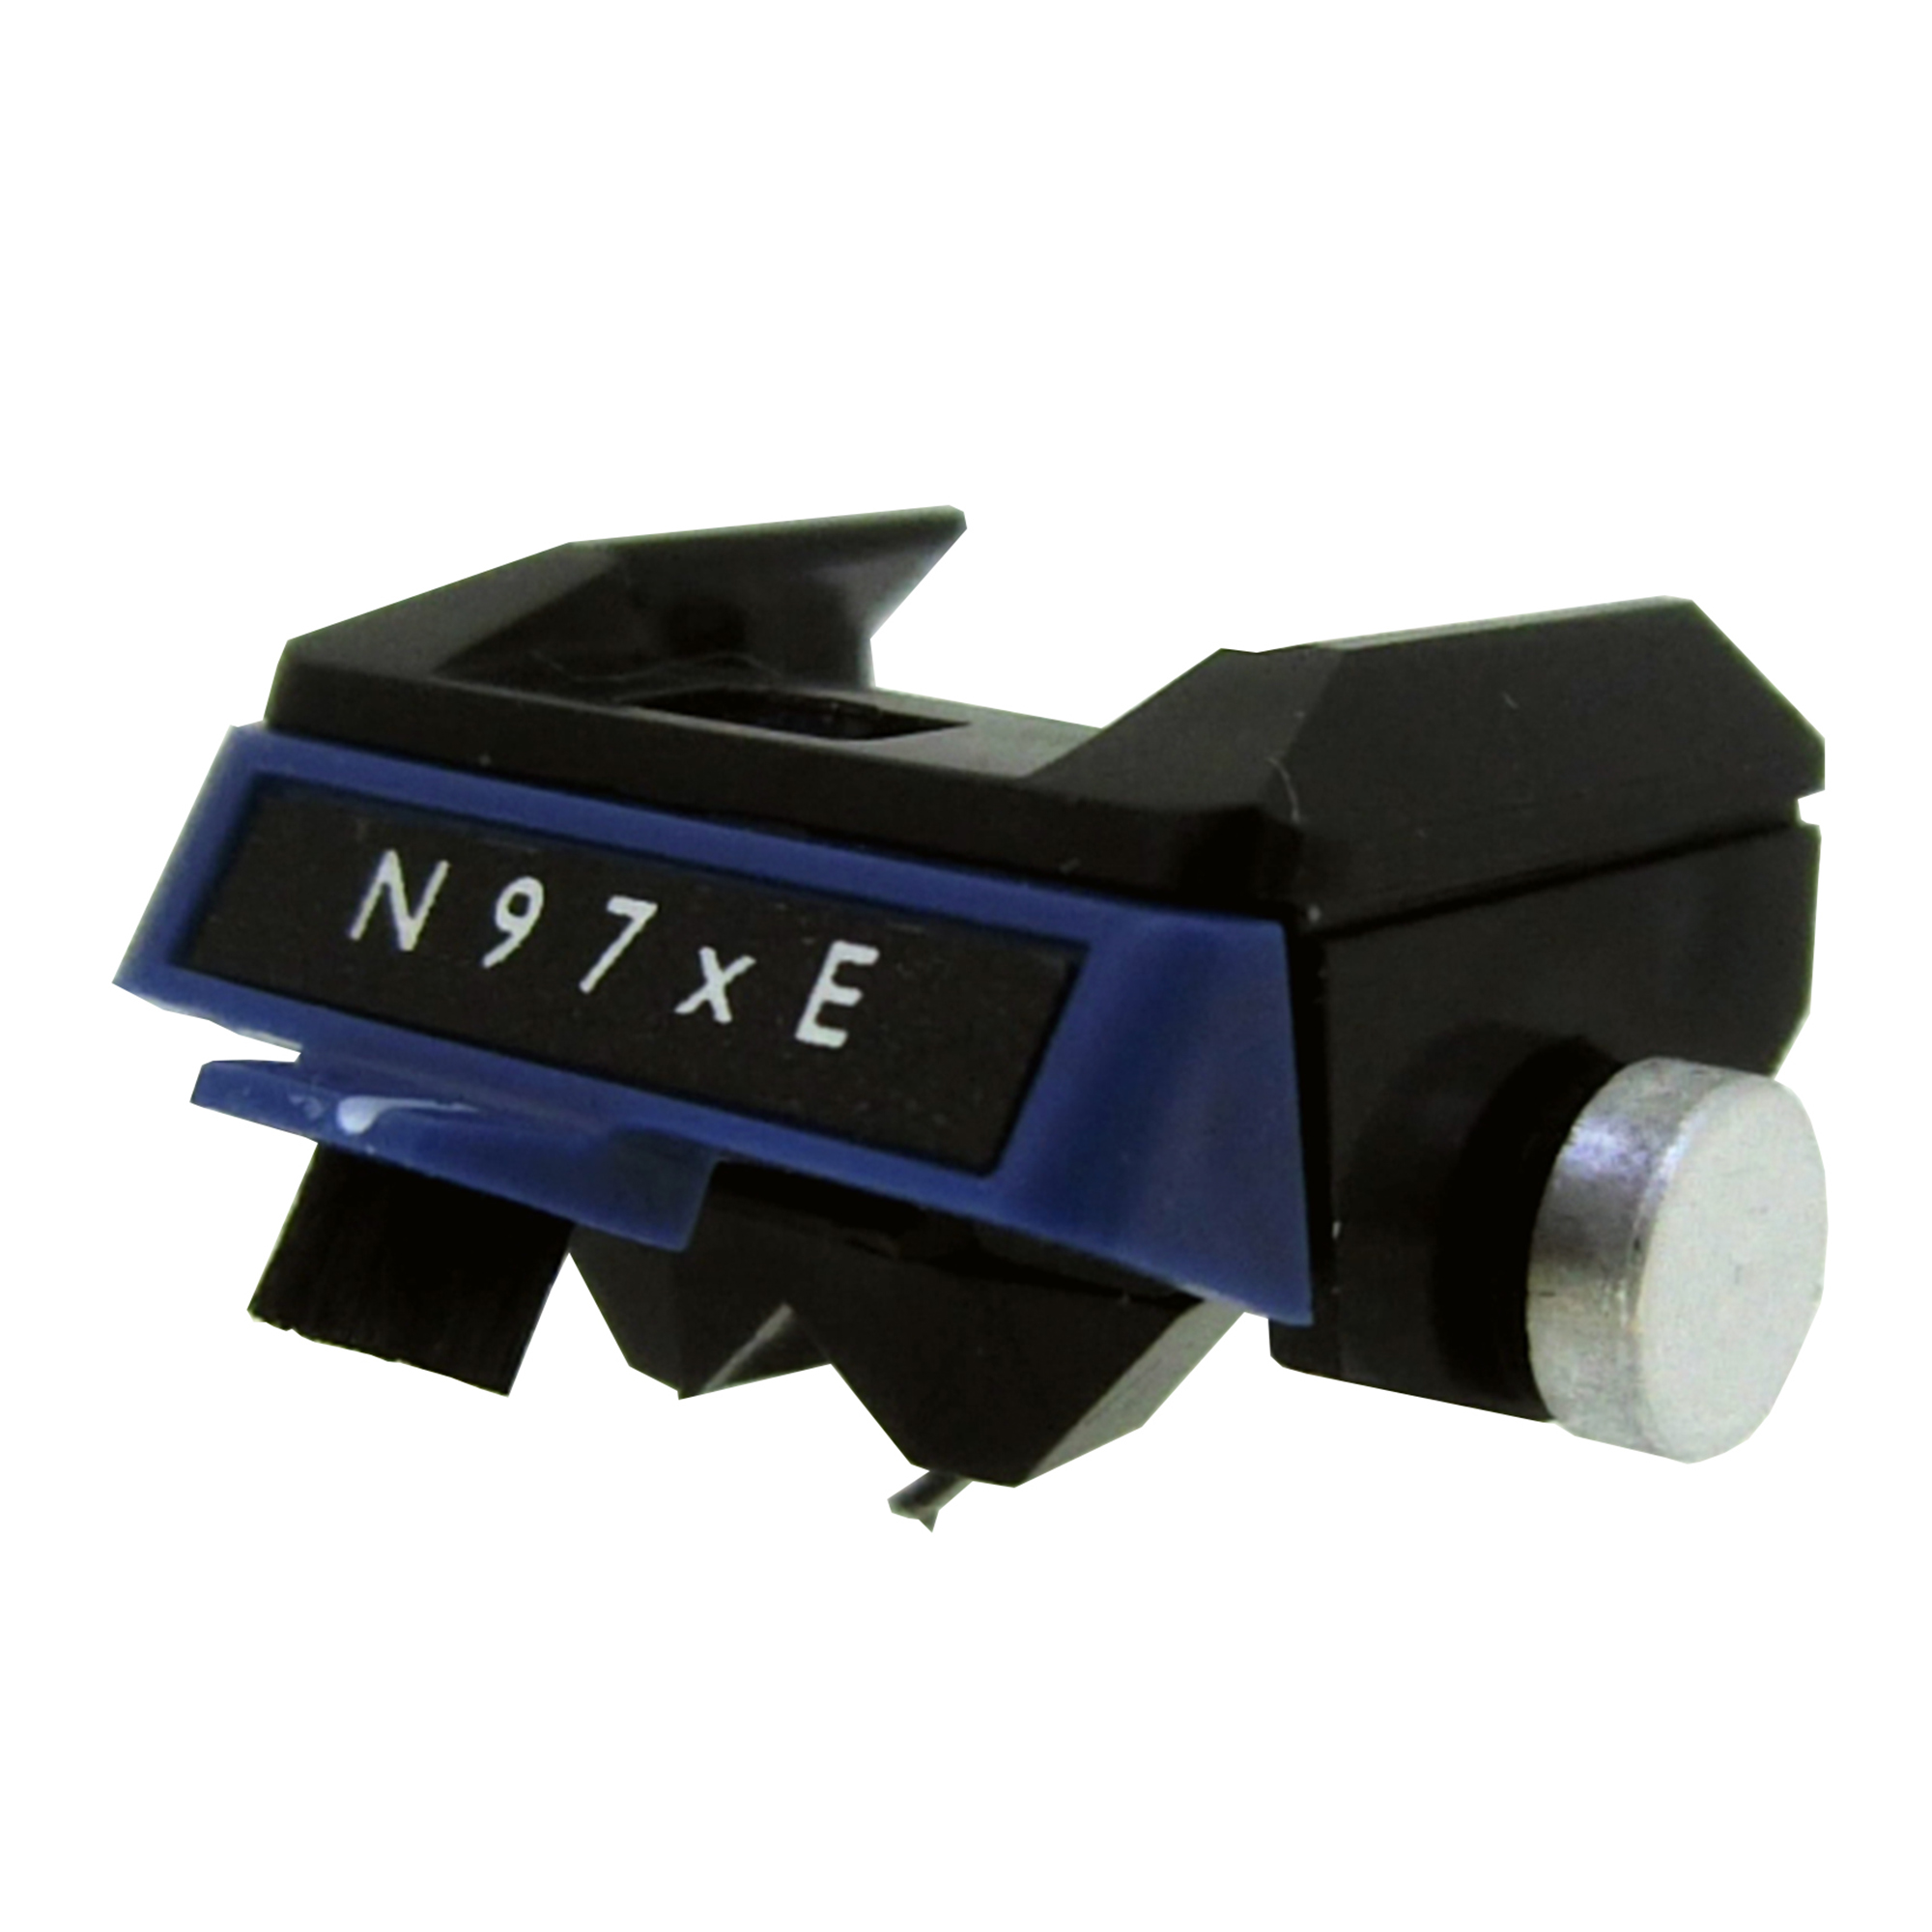 N97xE Shure 交換針 | JICO 日本精機宝石工業株式会社